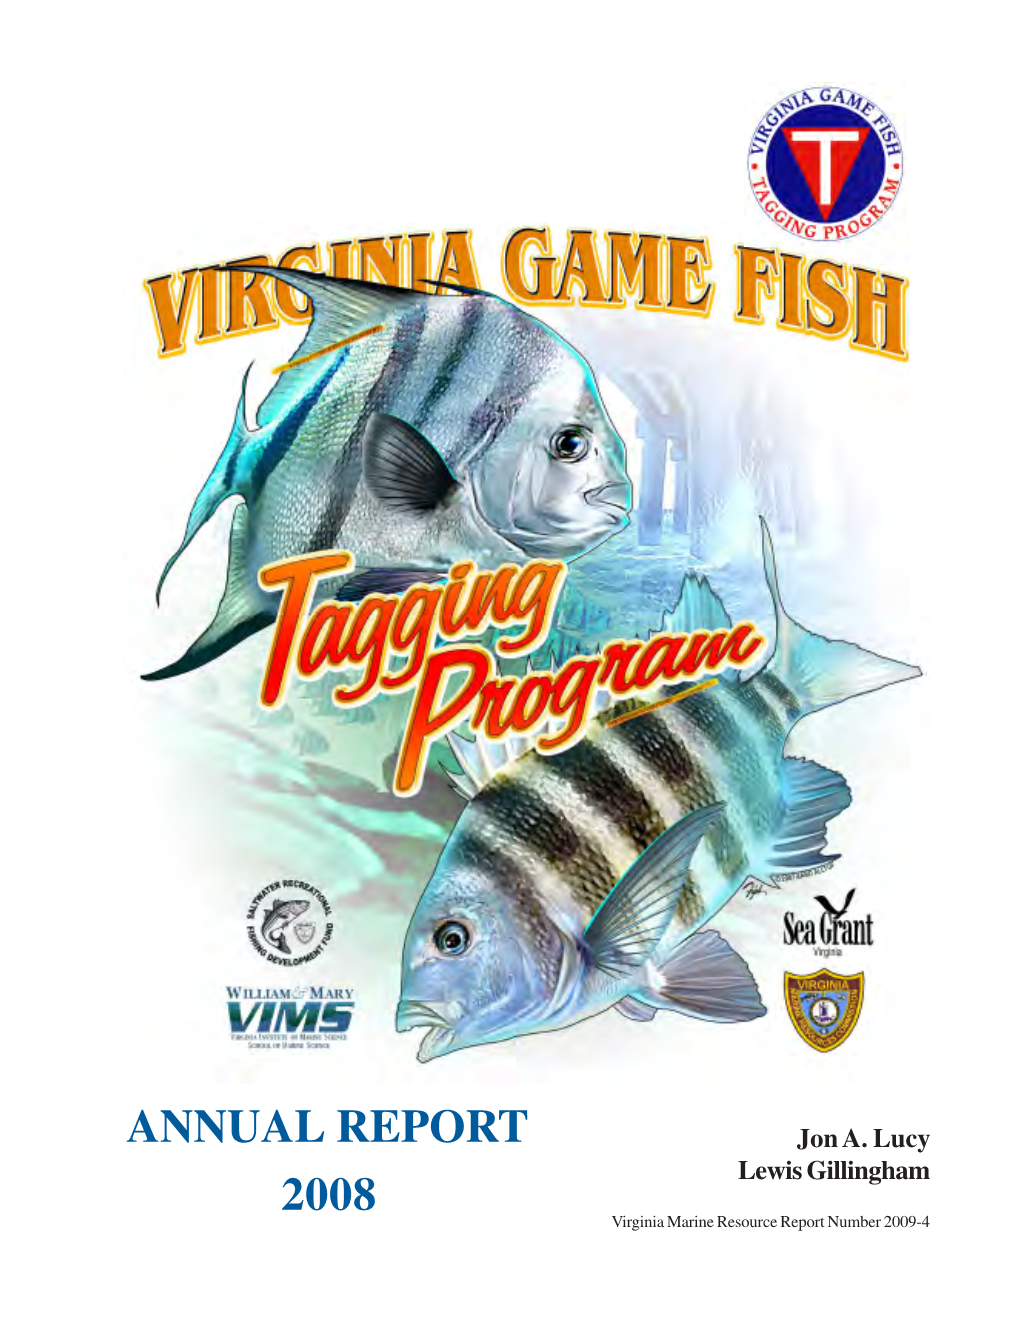 Virginia Game Fish Tagging Program Annual Report 2008